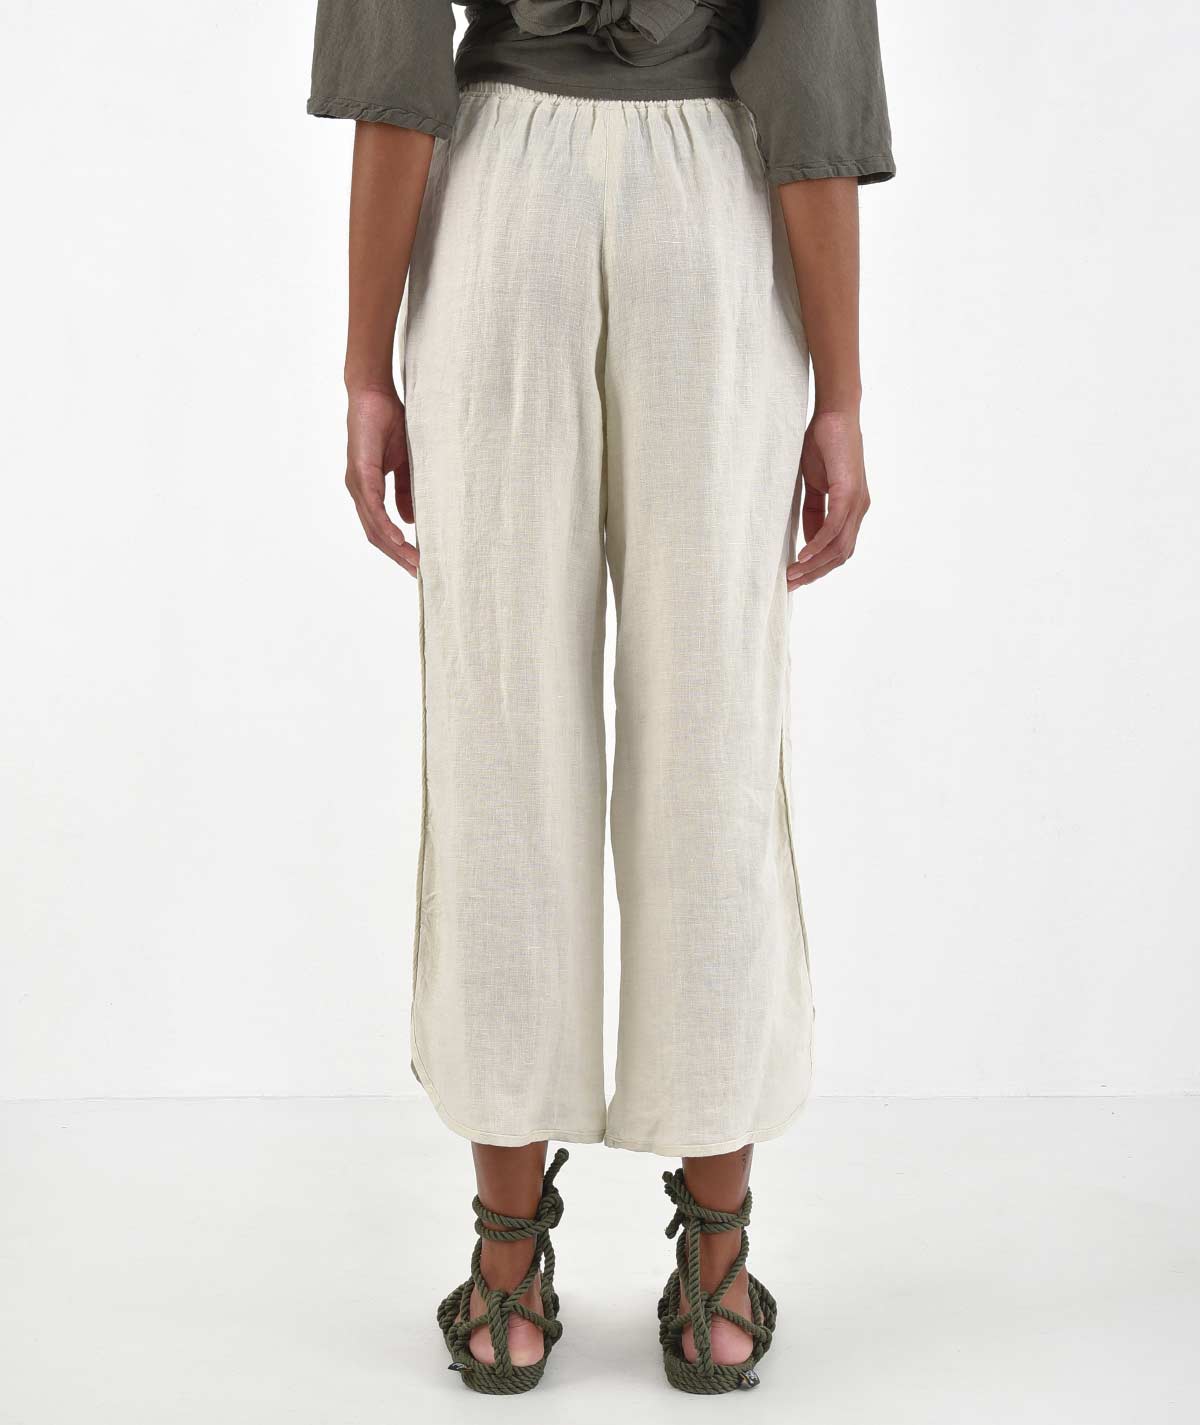 Linen Pants With Elastic Waist - Organic Cotton fashion